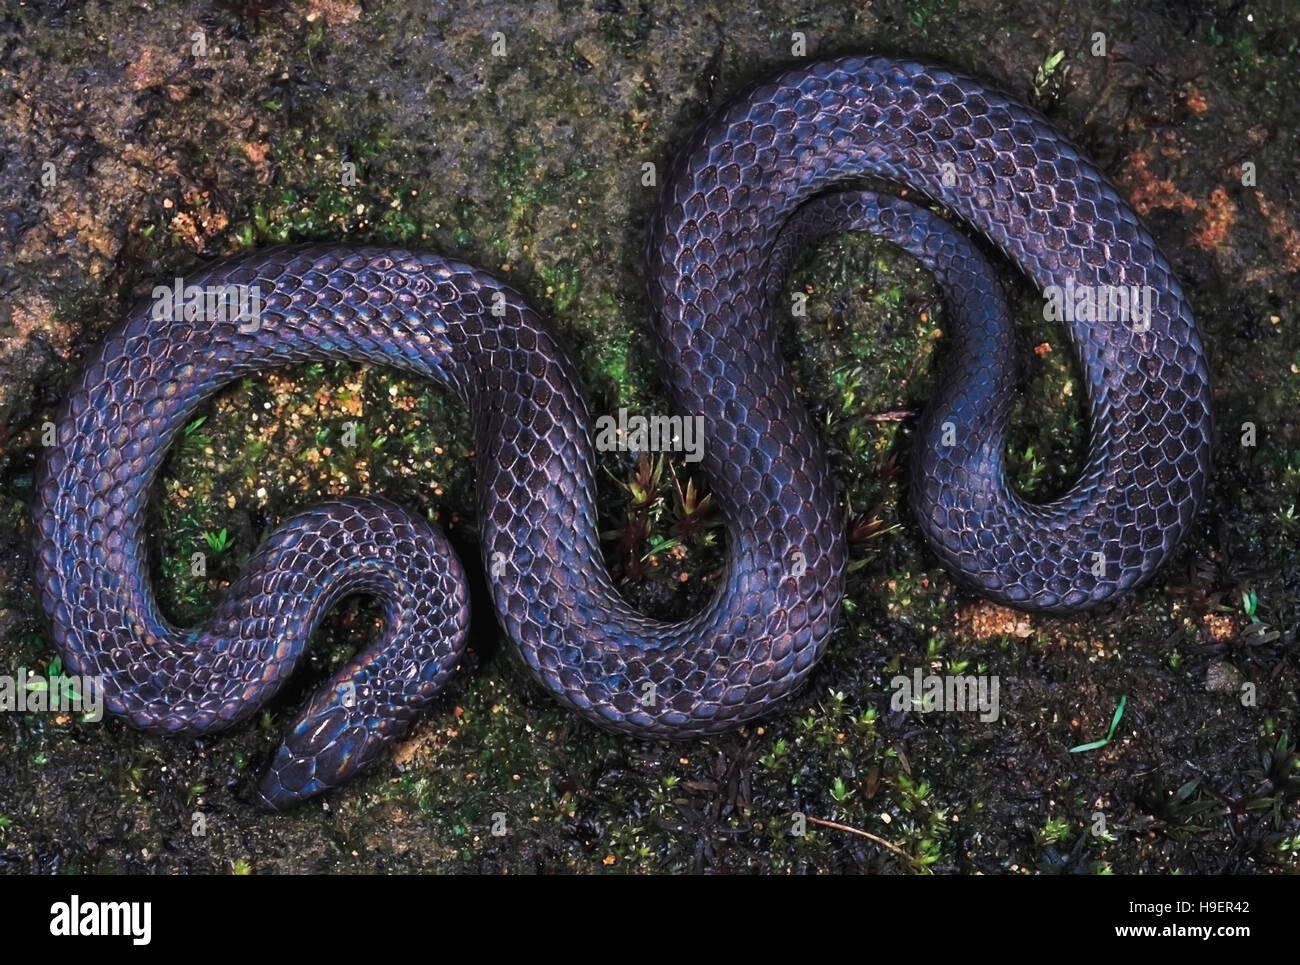 Blythia Reticulata. Iridescent snake. Non venomous. Probably the only photograph of this snake. Arunachal Pradesh, India. Stock Photo